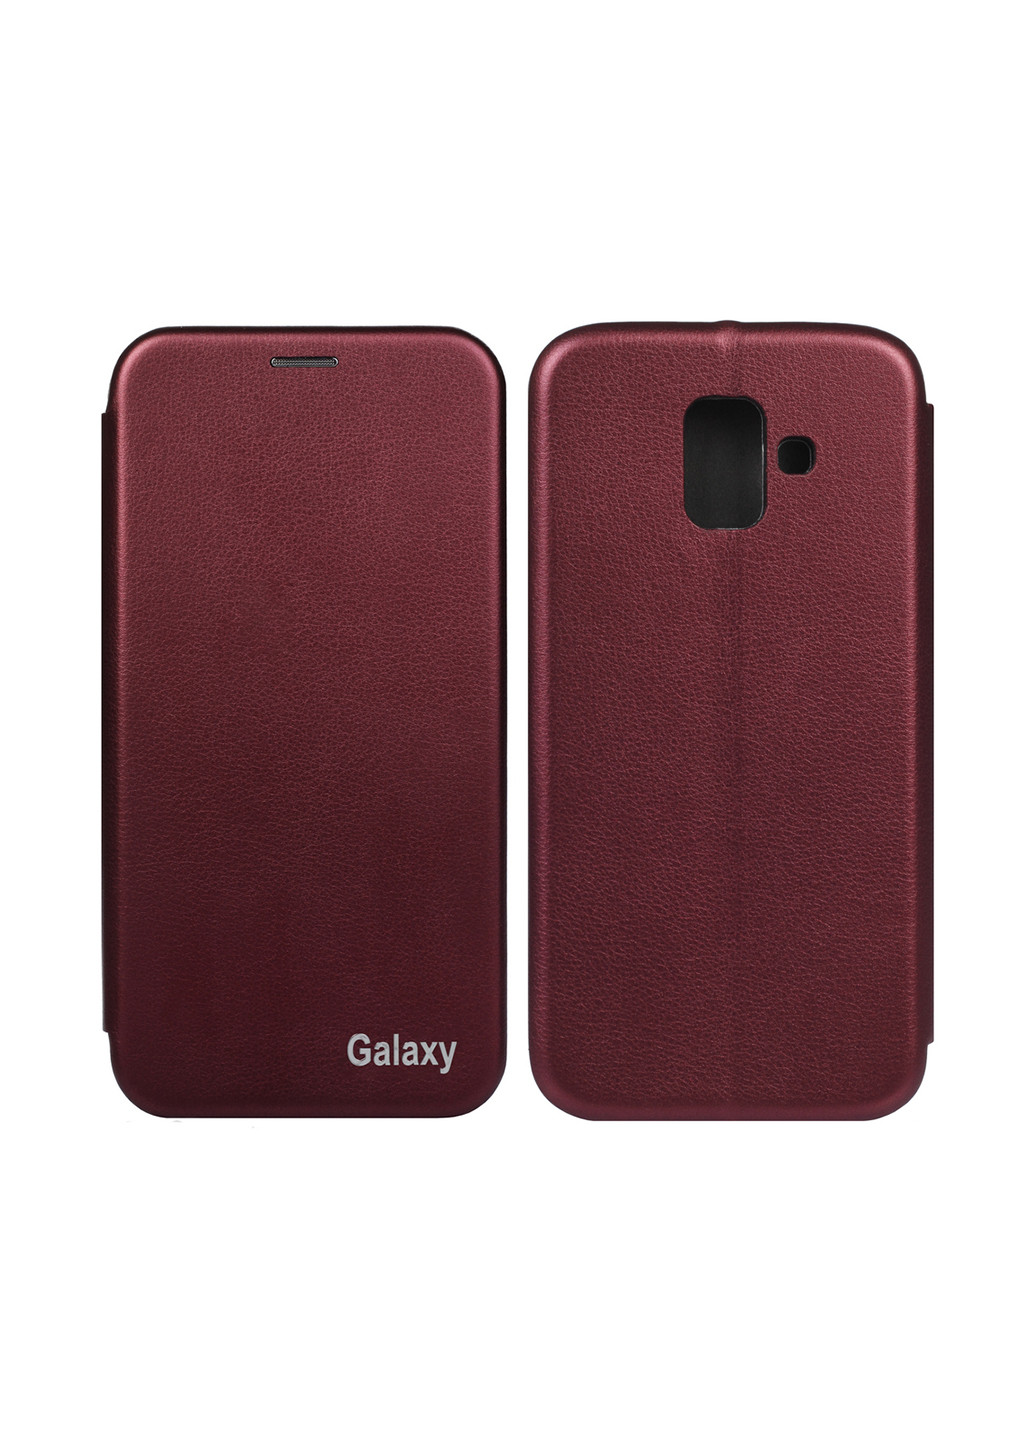 Чехол-книжка Exclusive для Samsung Galaxy A6 SM-A600 Burgundy Red (702523) BeCover книжка exclusive для samsung galaxy a6 sm-a600 burgundy red (702523) (145630544)